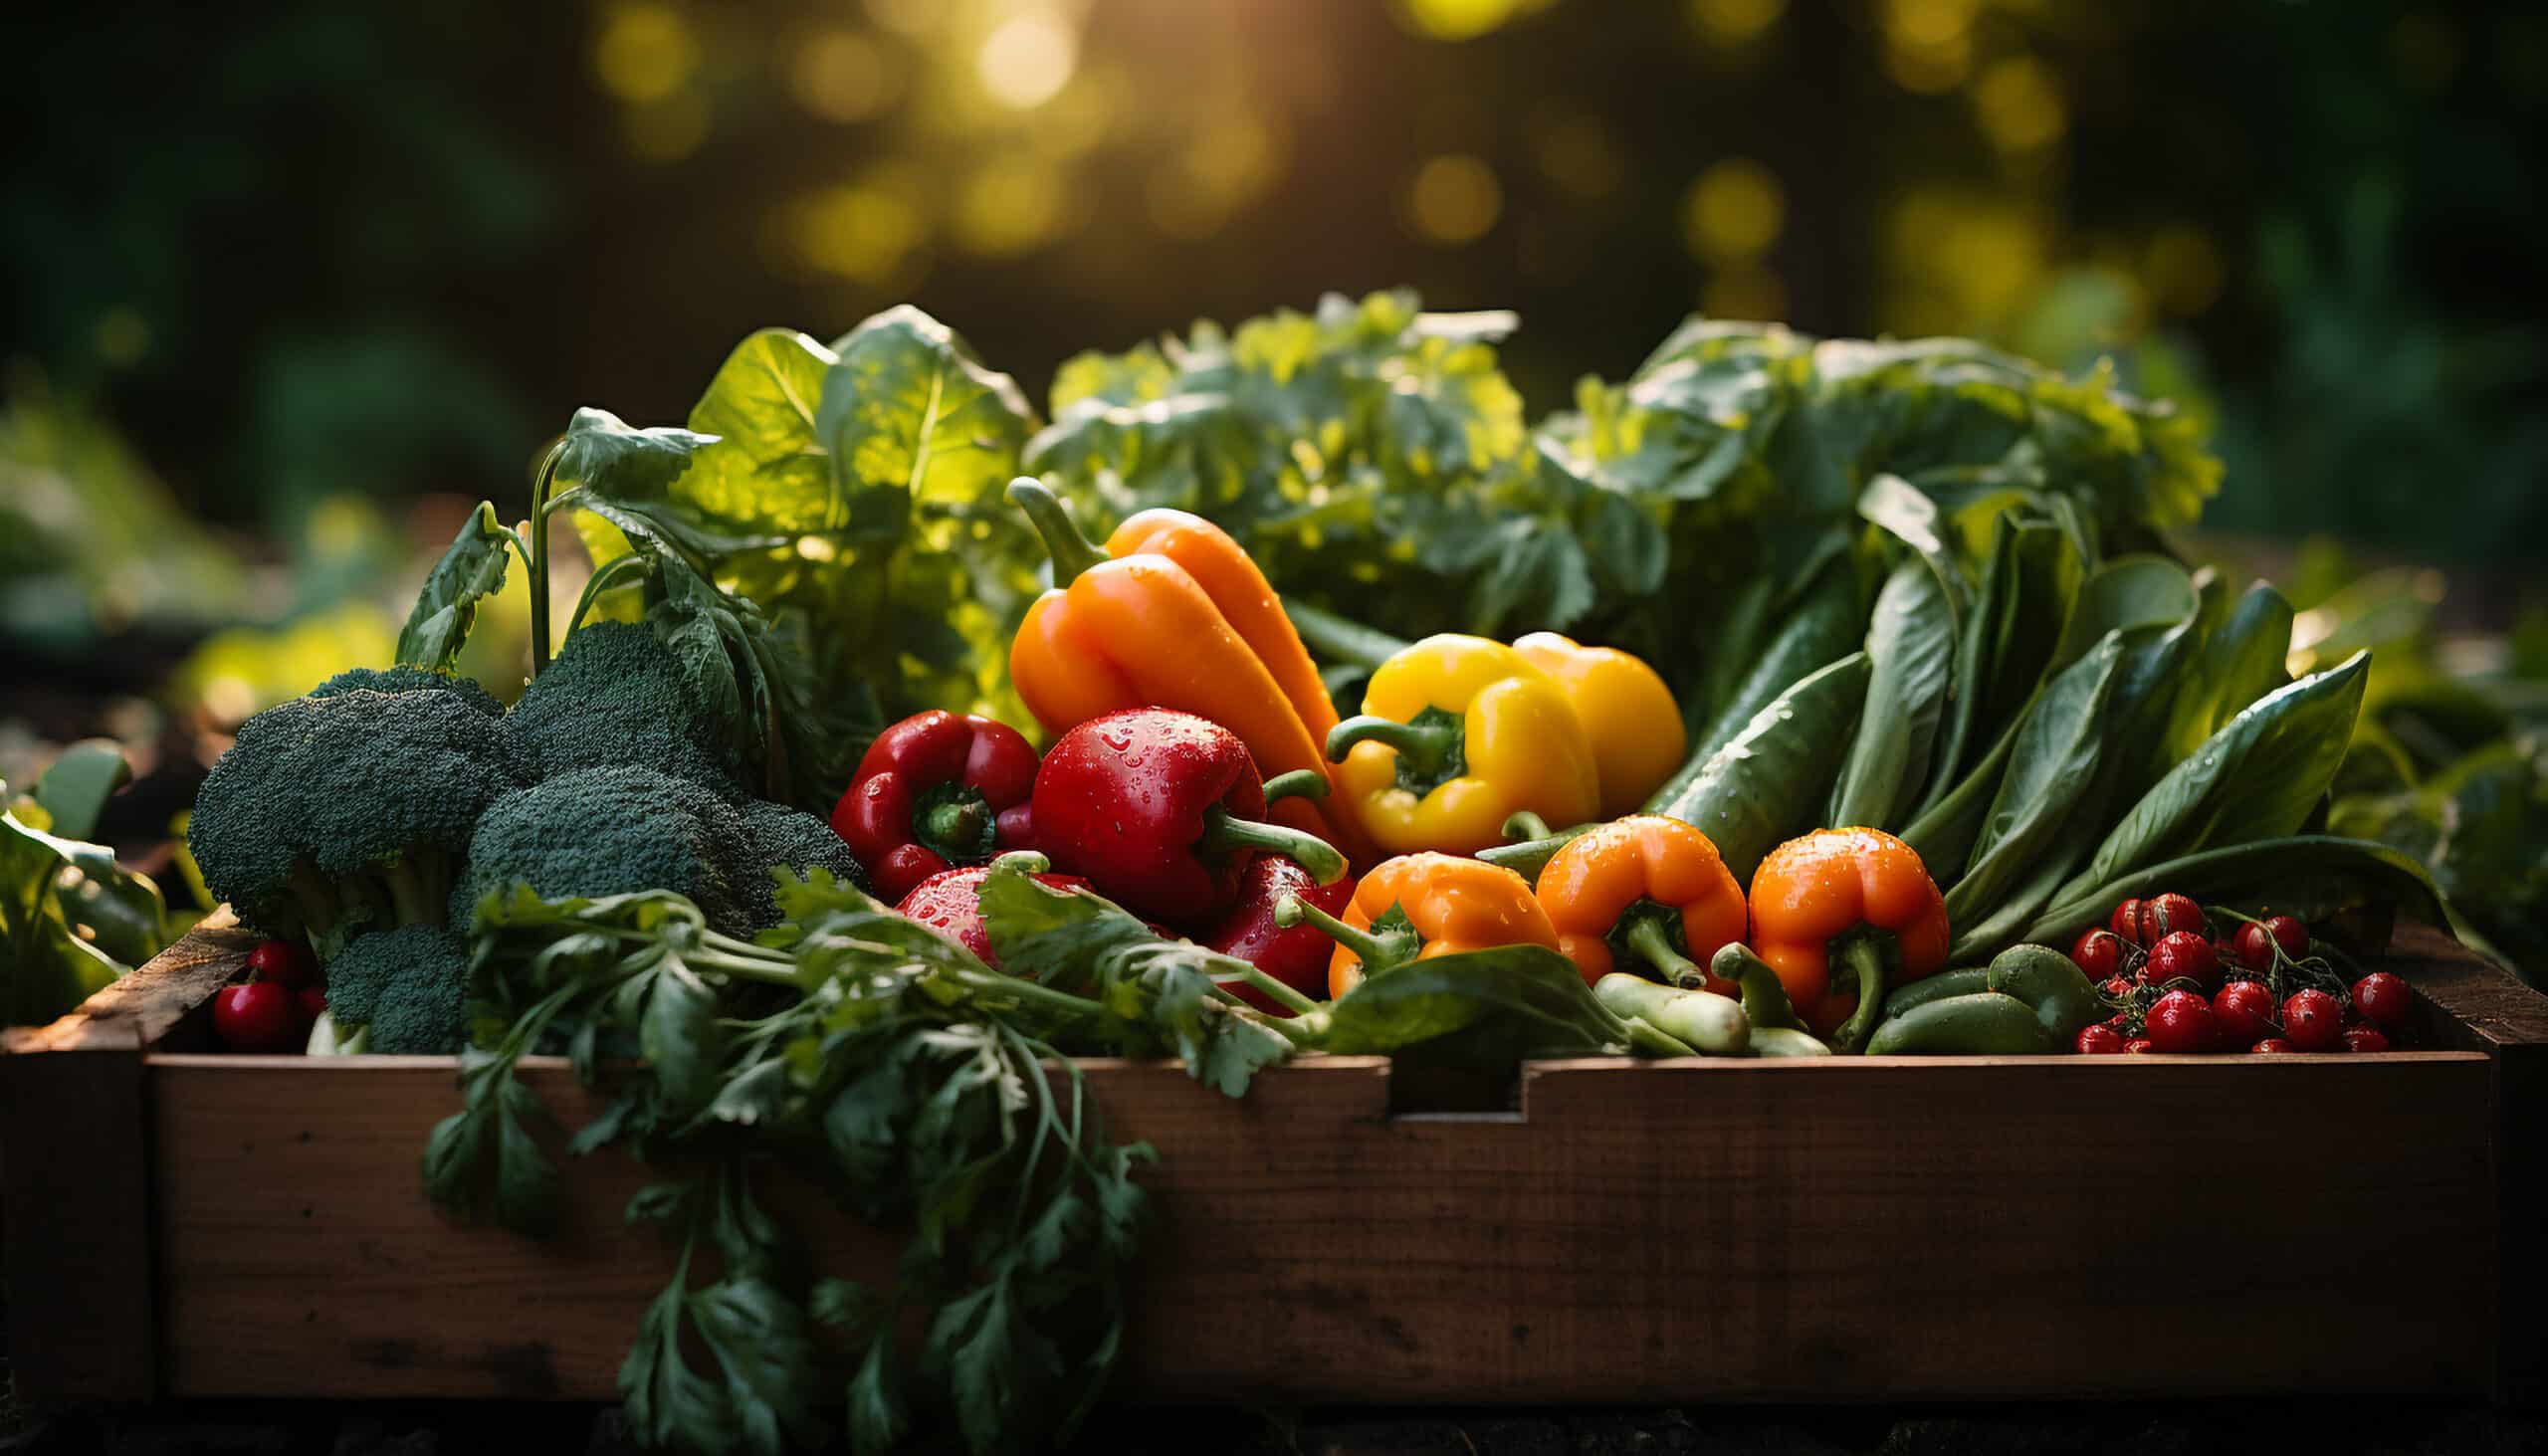 growmyownhealthfood.com : What is a basic veggie garden plan?